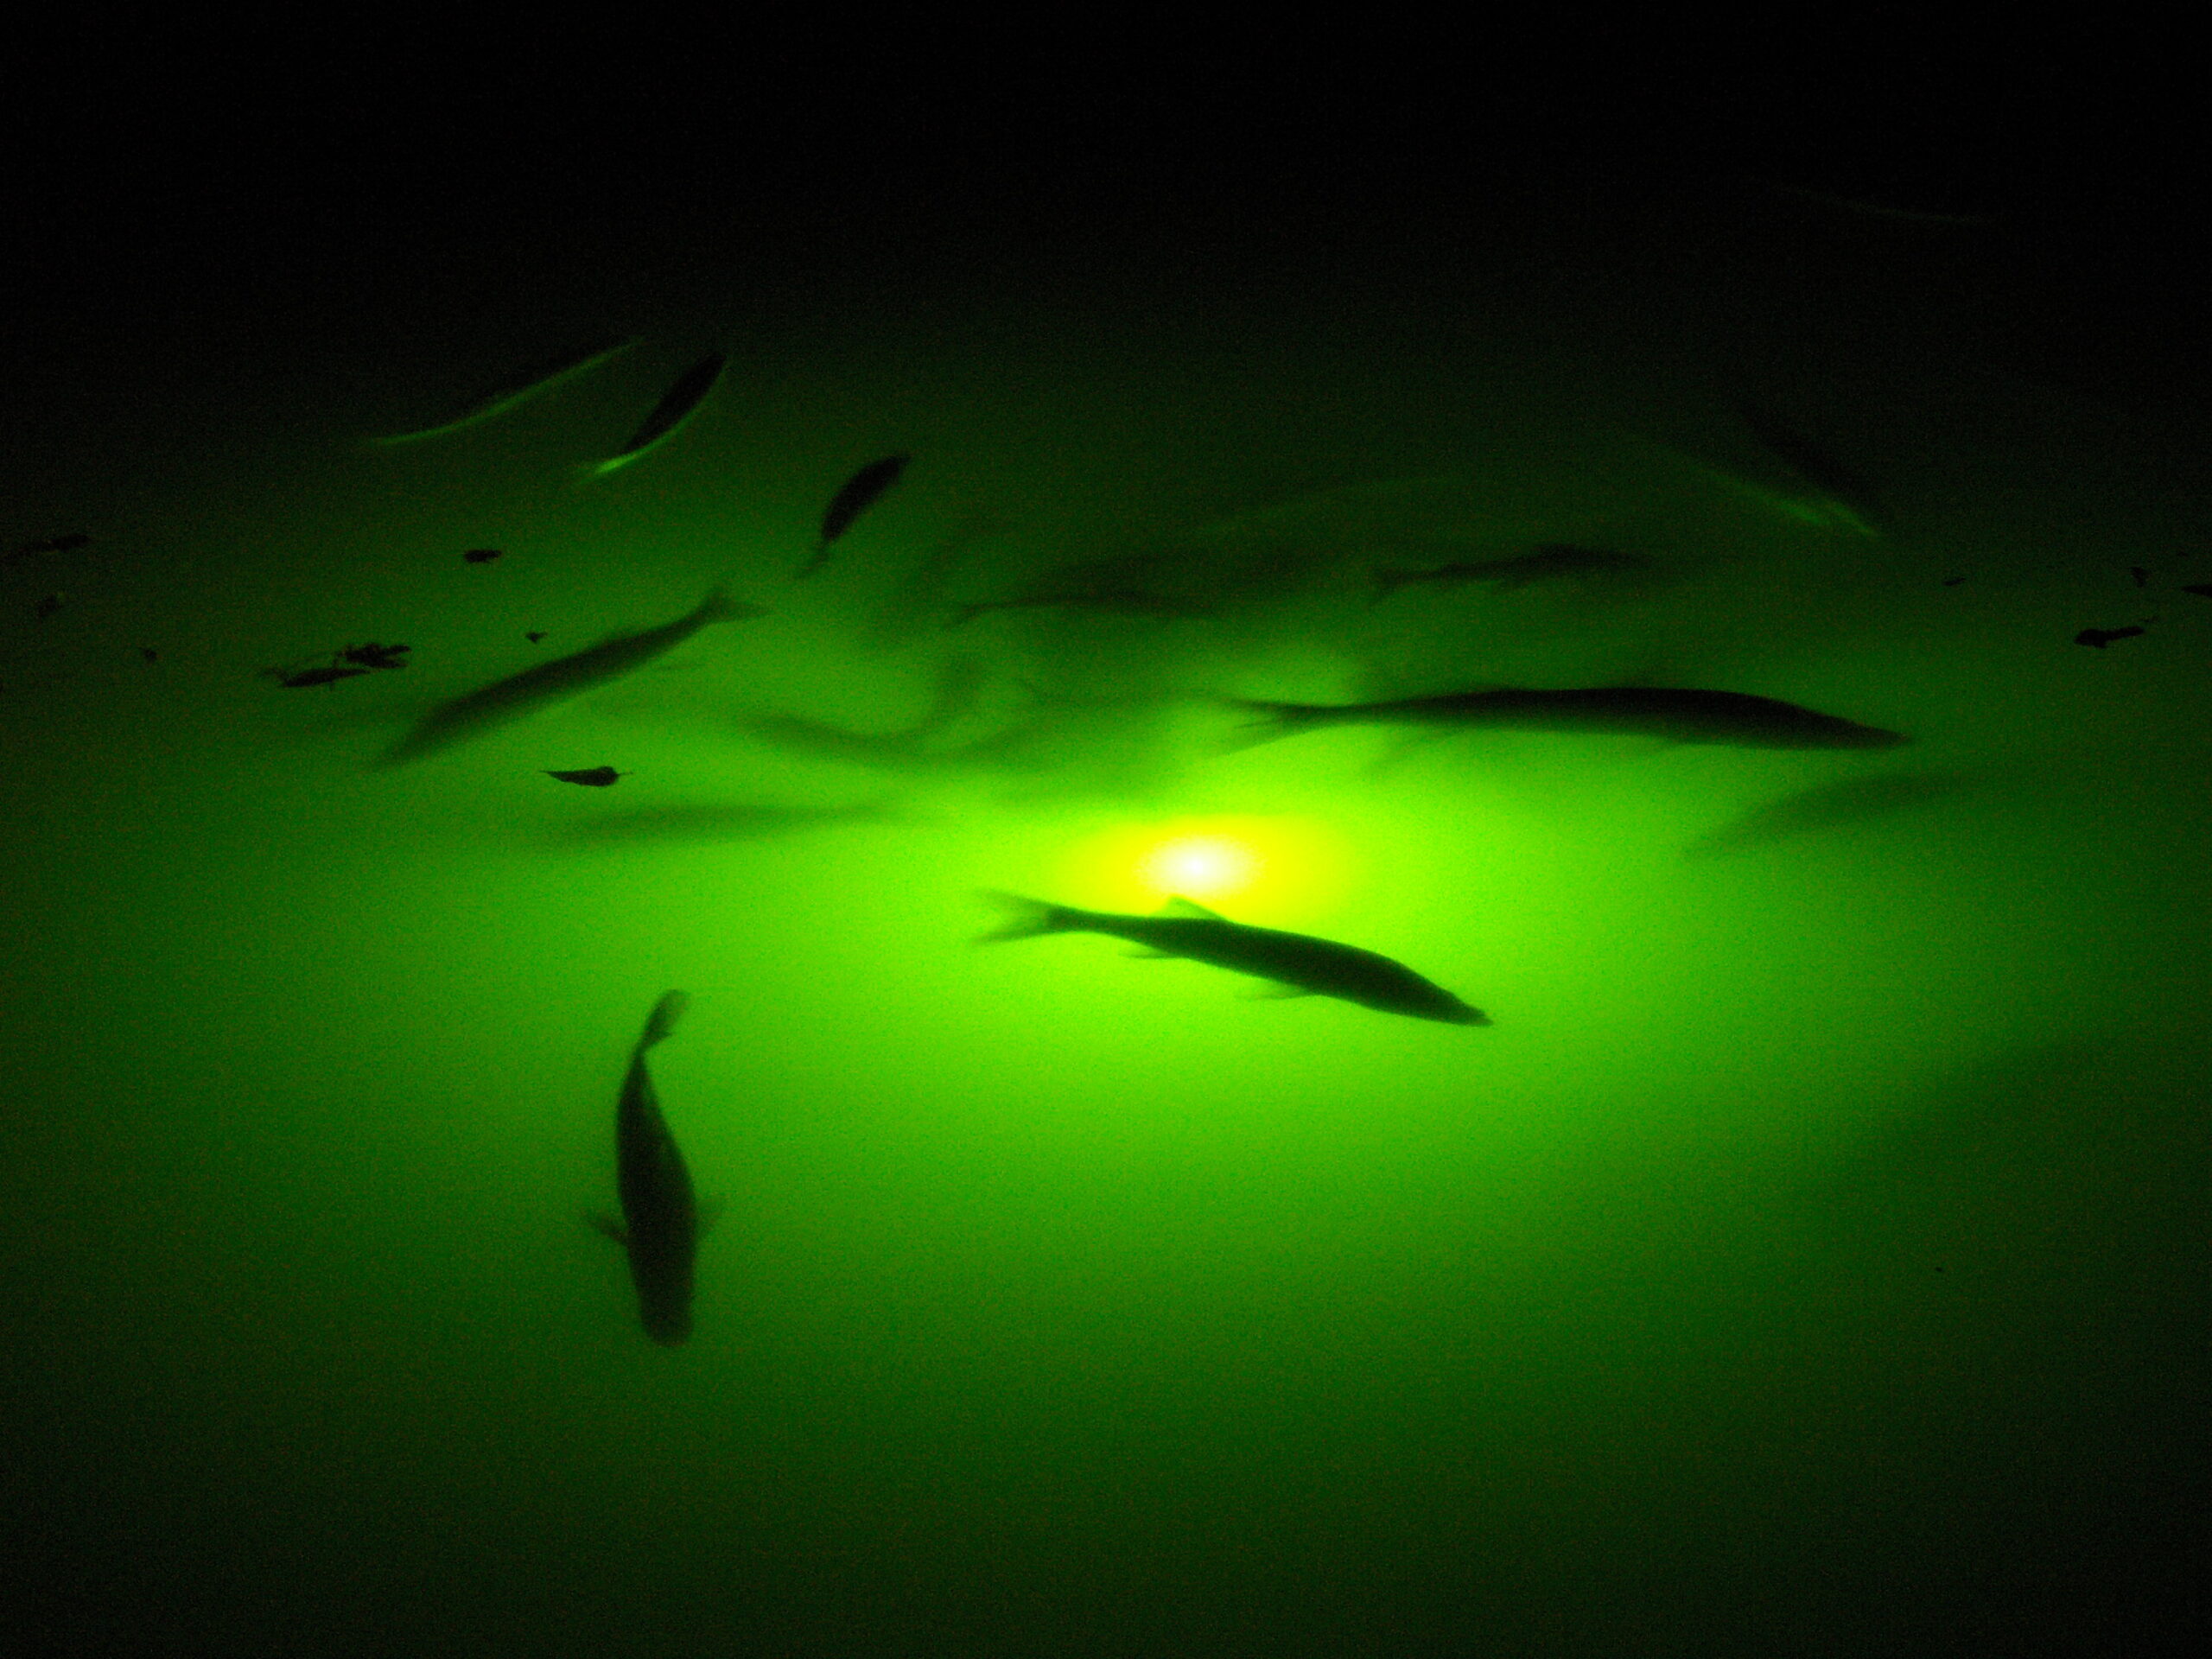 https://underwaterfishlight.com/wp-content/uploads/2021/07/Fishing-tips-for-dock-lights-scaled.jpg